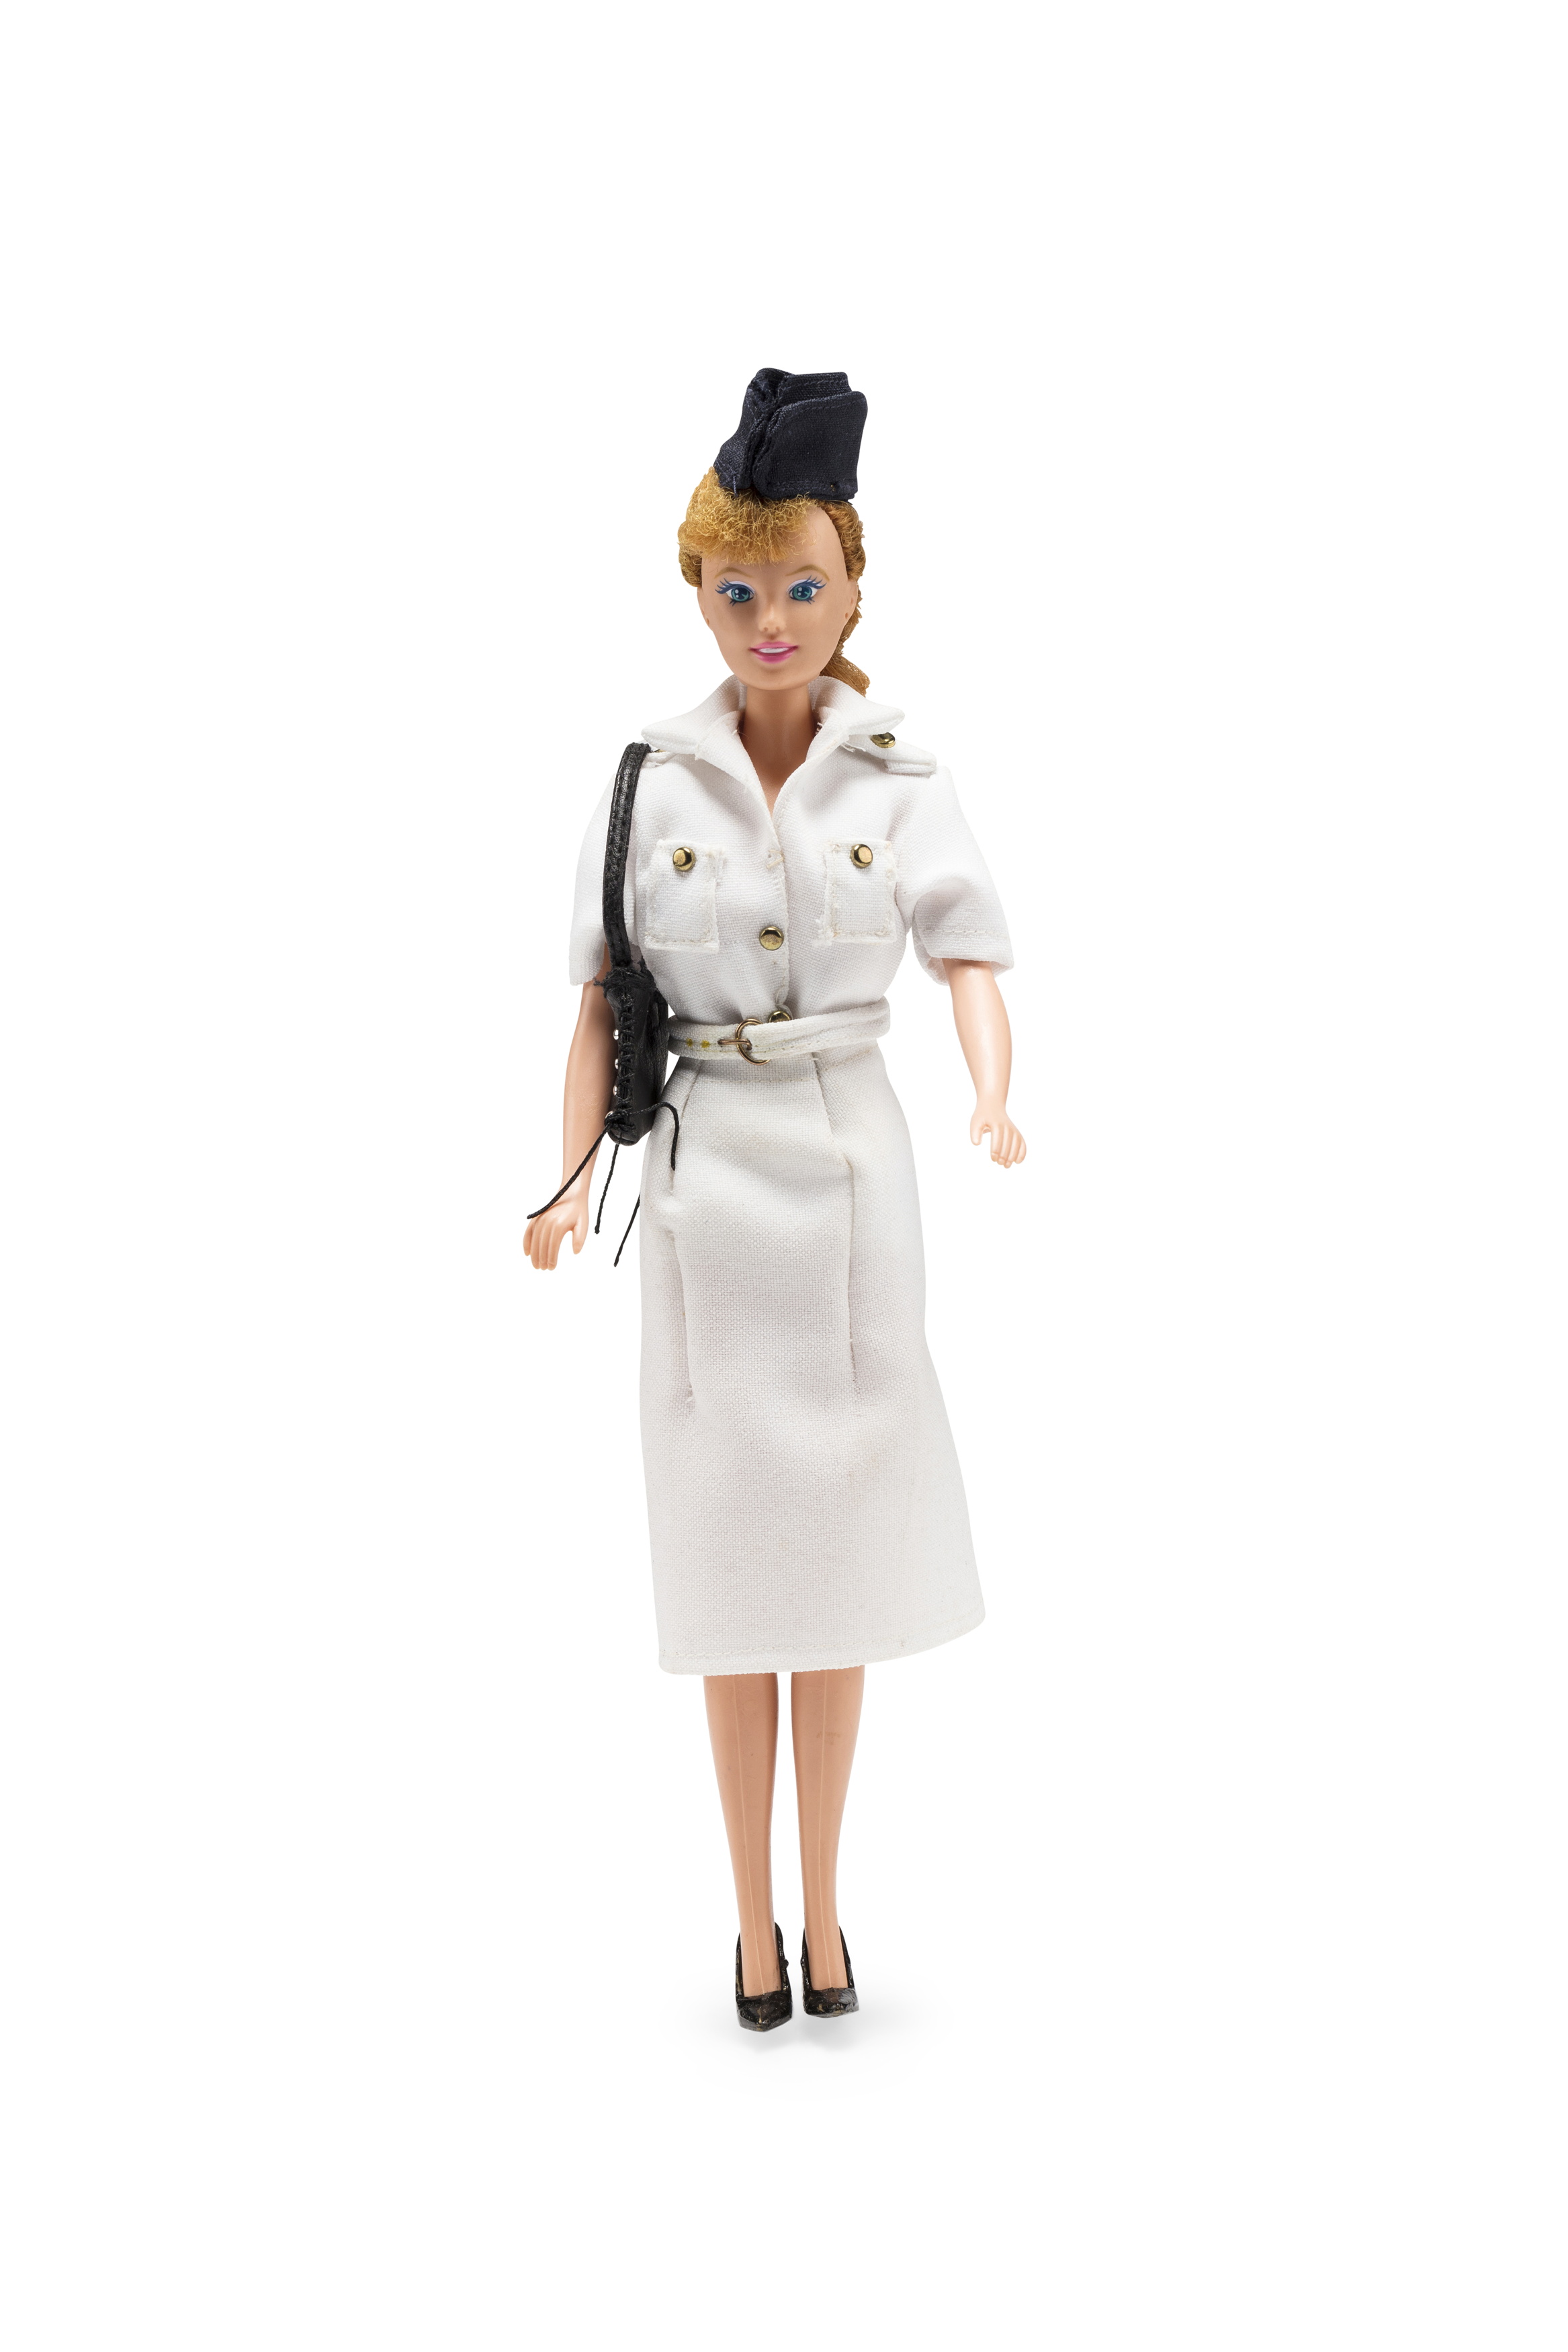 Doll wearing 'tropical' Qantas uniform worn by flight attendants from 1948-1959